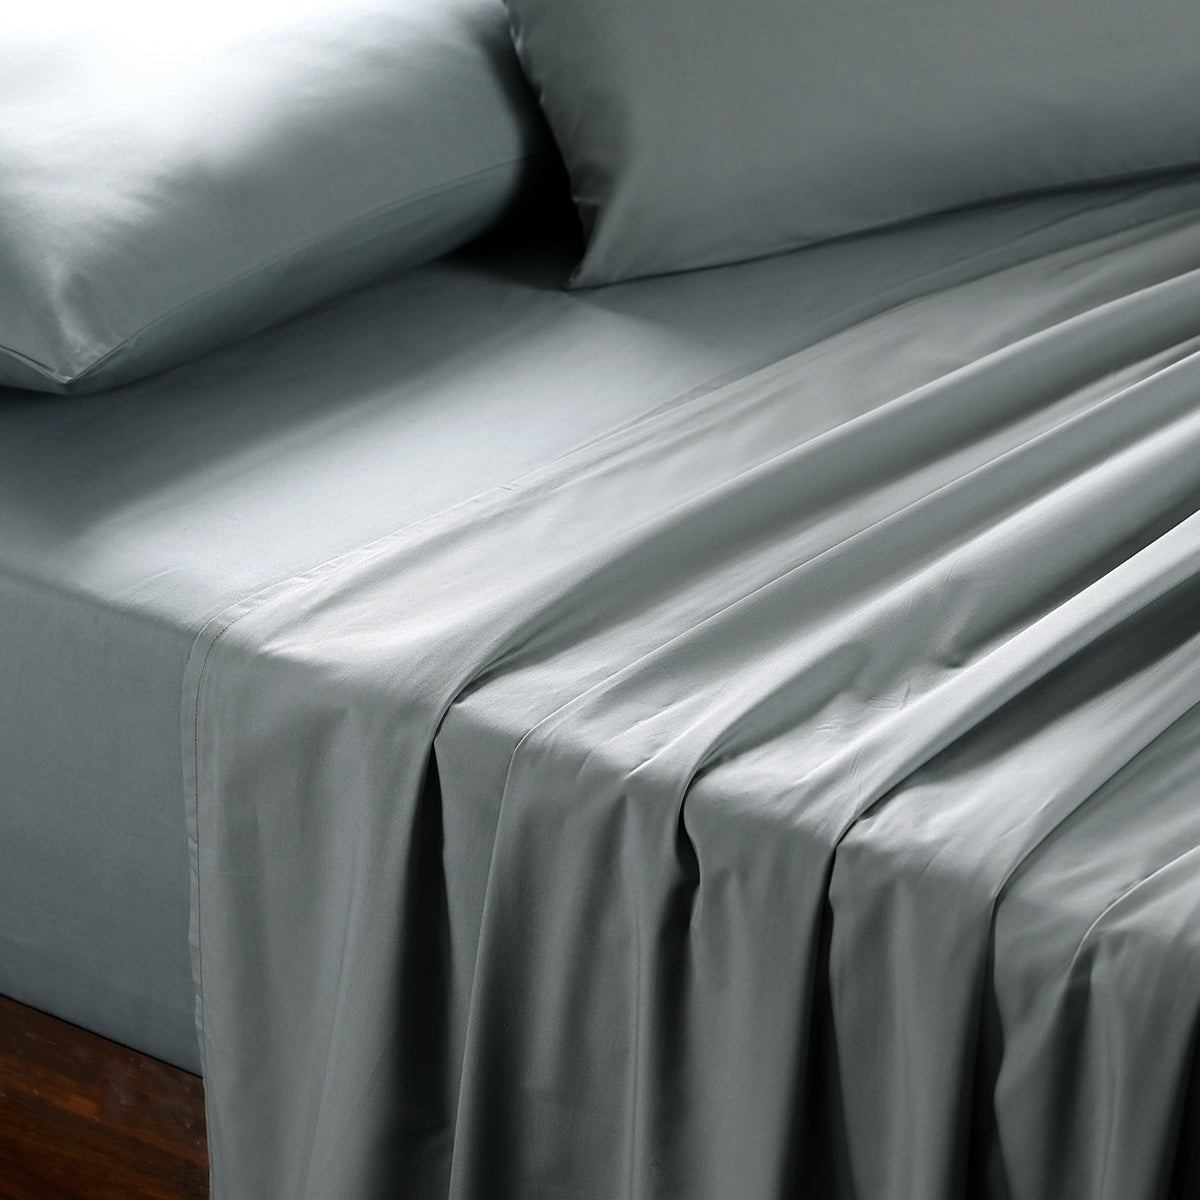 Slumber Plain Easy Care Percale 100% Cotton Steel Grey Crisp Bed Sheet